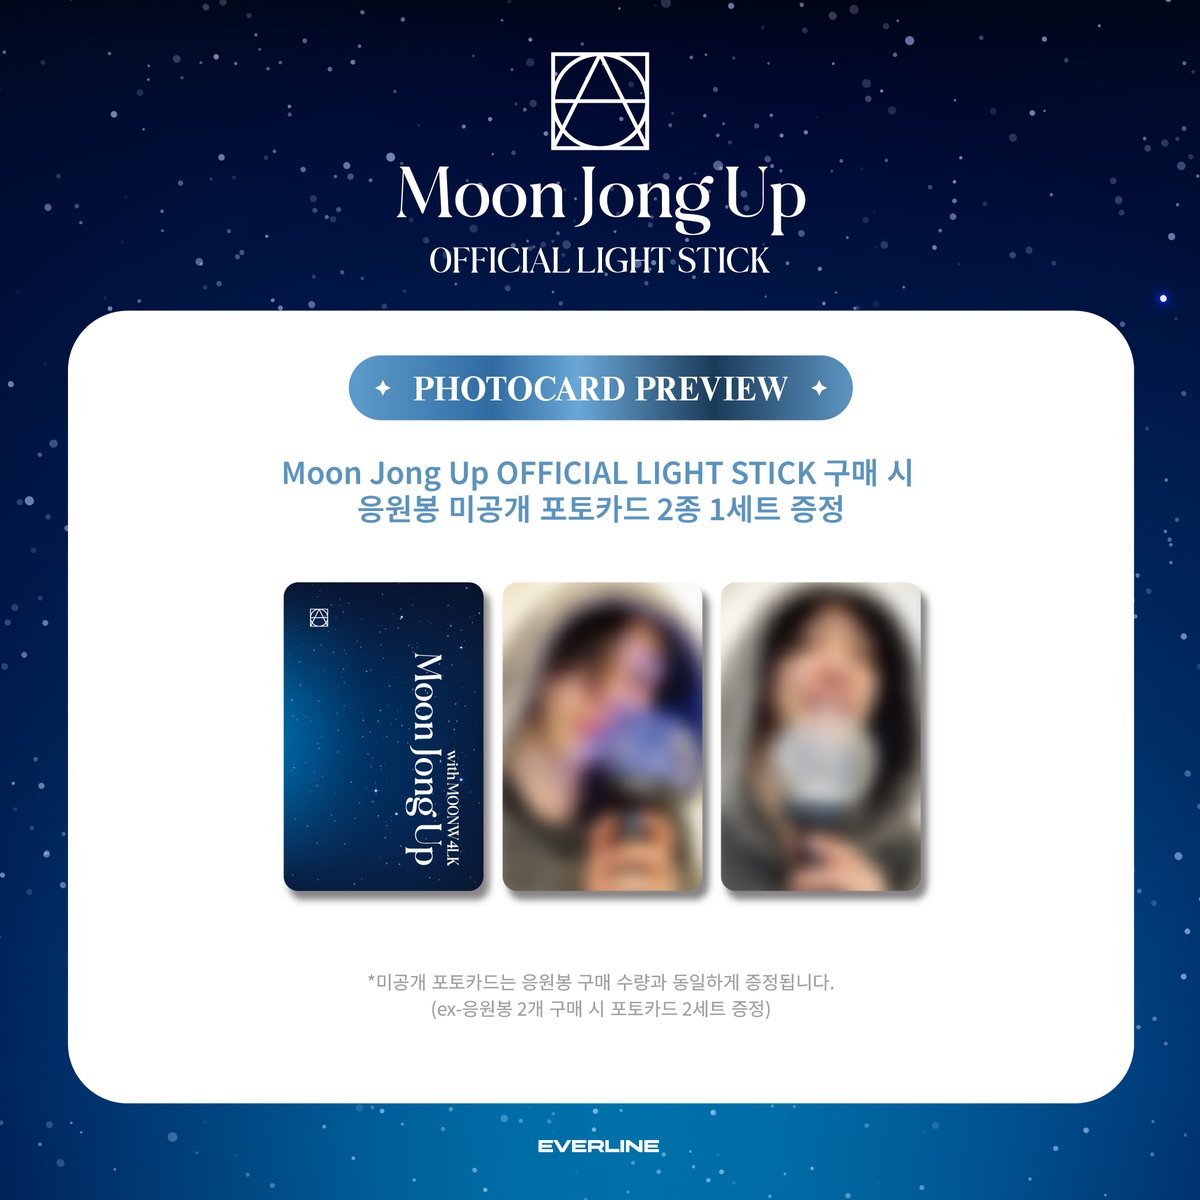 🎵 Moon Jong Up OFFICIAL LIGHT STICK 📸 에버라인 단독 특전 포토카드 미리보기🎵 🔗 : bit.ly/4aBhwCP #문종업 #MoonJongUp #공식응원봉 #LIGHTSTICK #에버라인 #EVERLINE